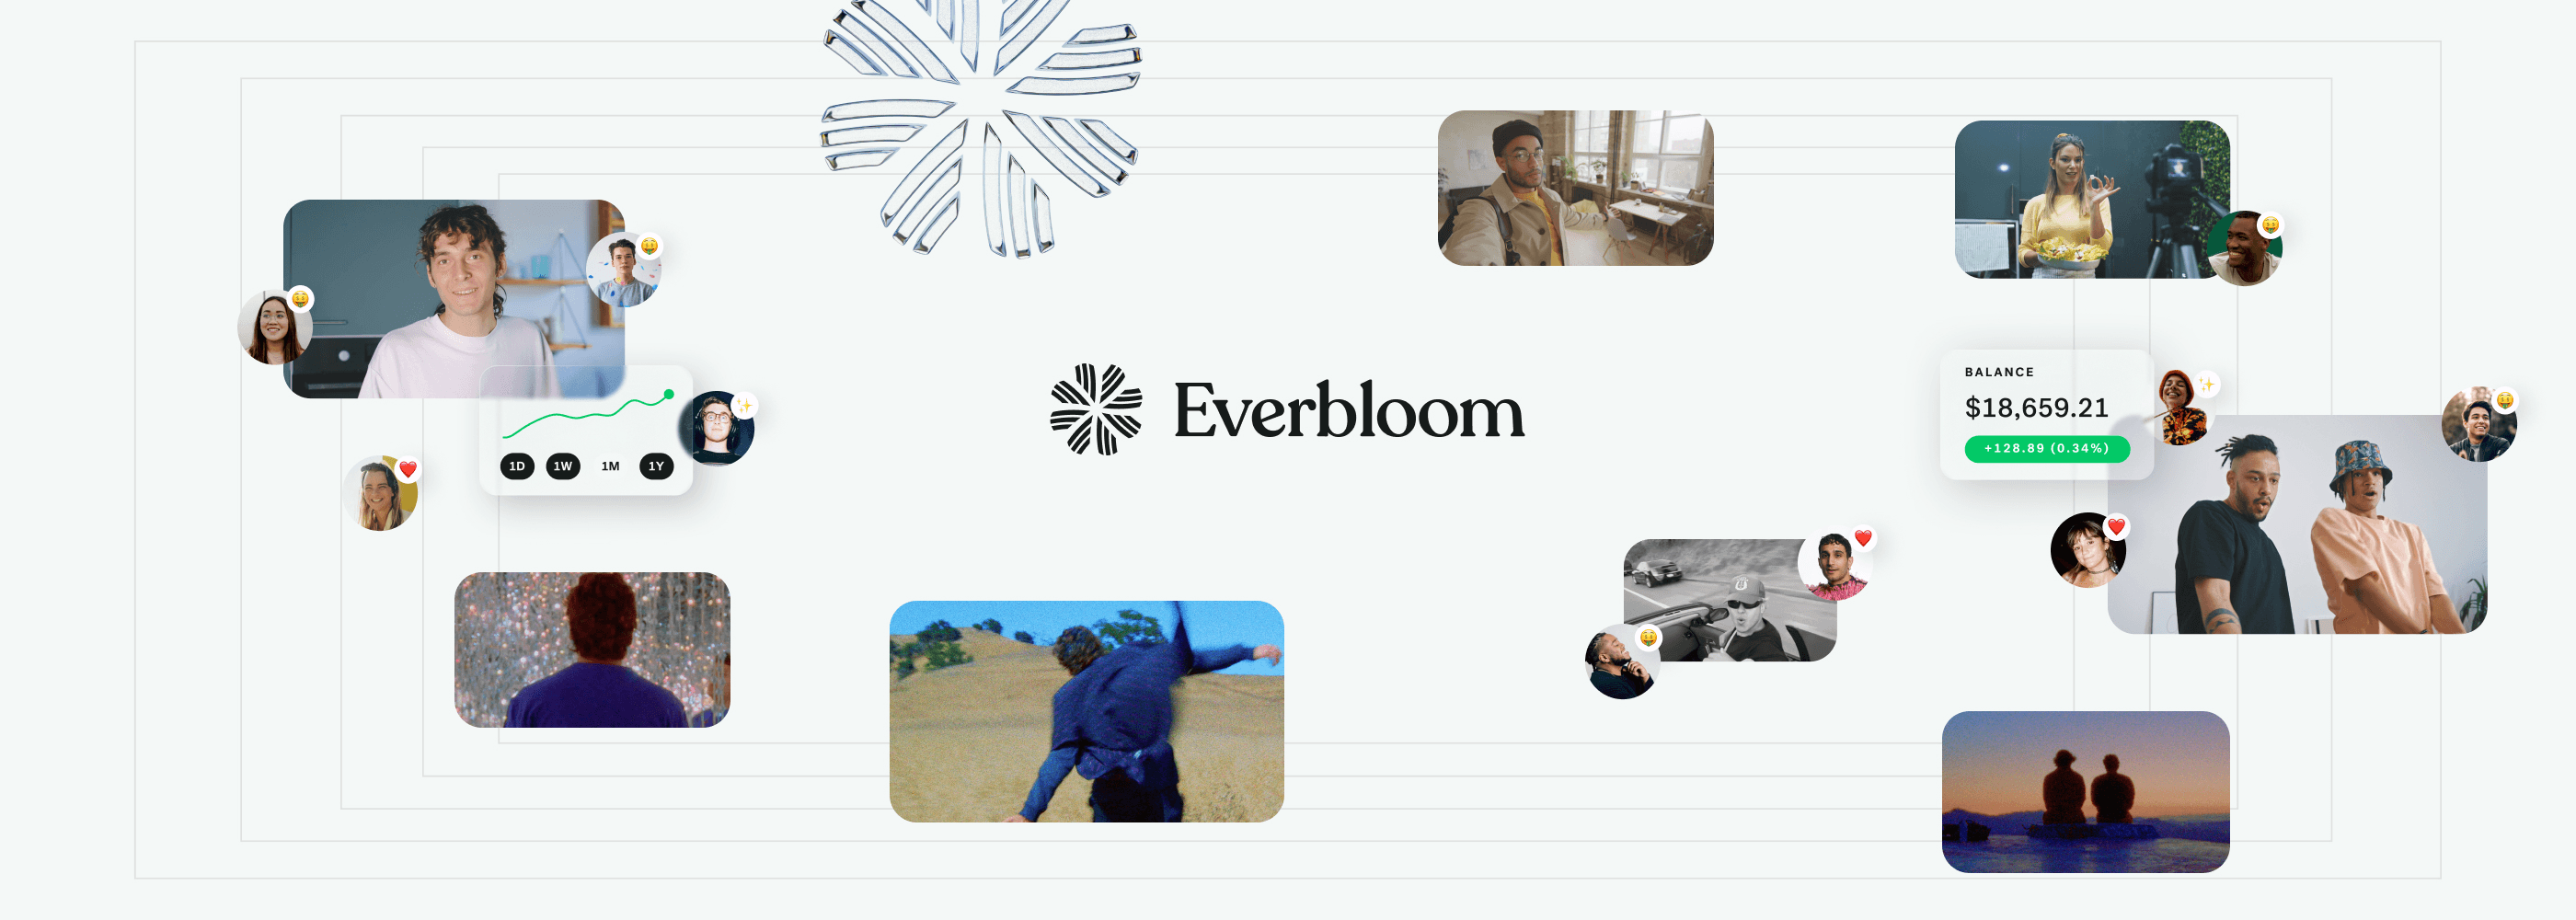 Everbloom banner